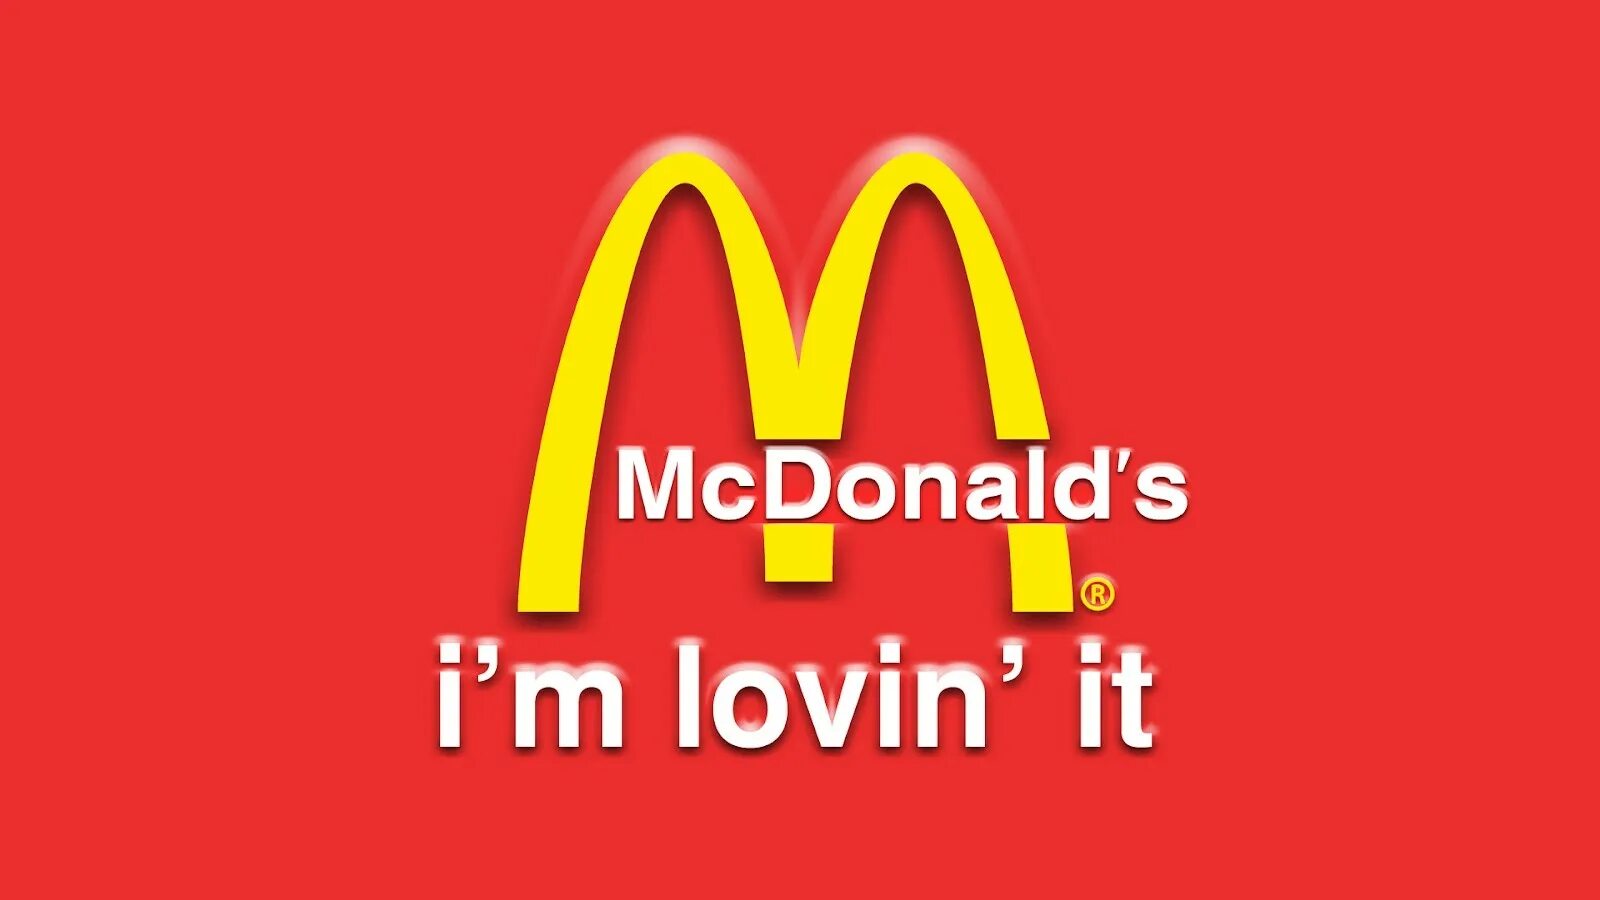 М i m e. Логотип и слоган макдональдс. Слоган компании макдональдс. Девиз Макдоналдс. Im Lovin it макдональдс.